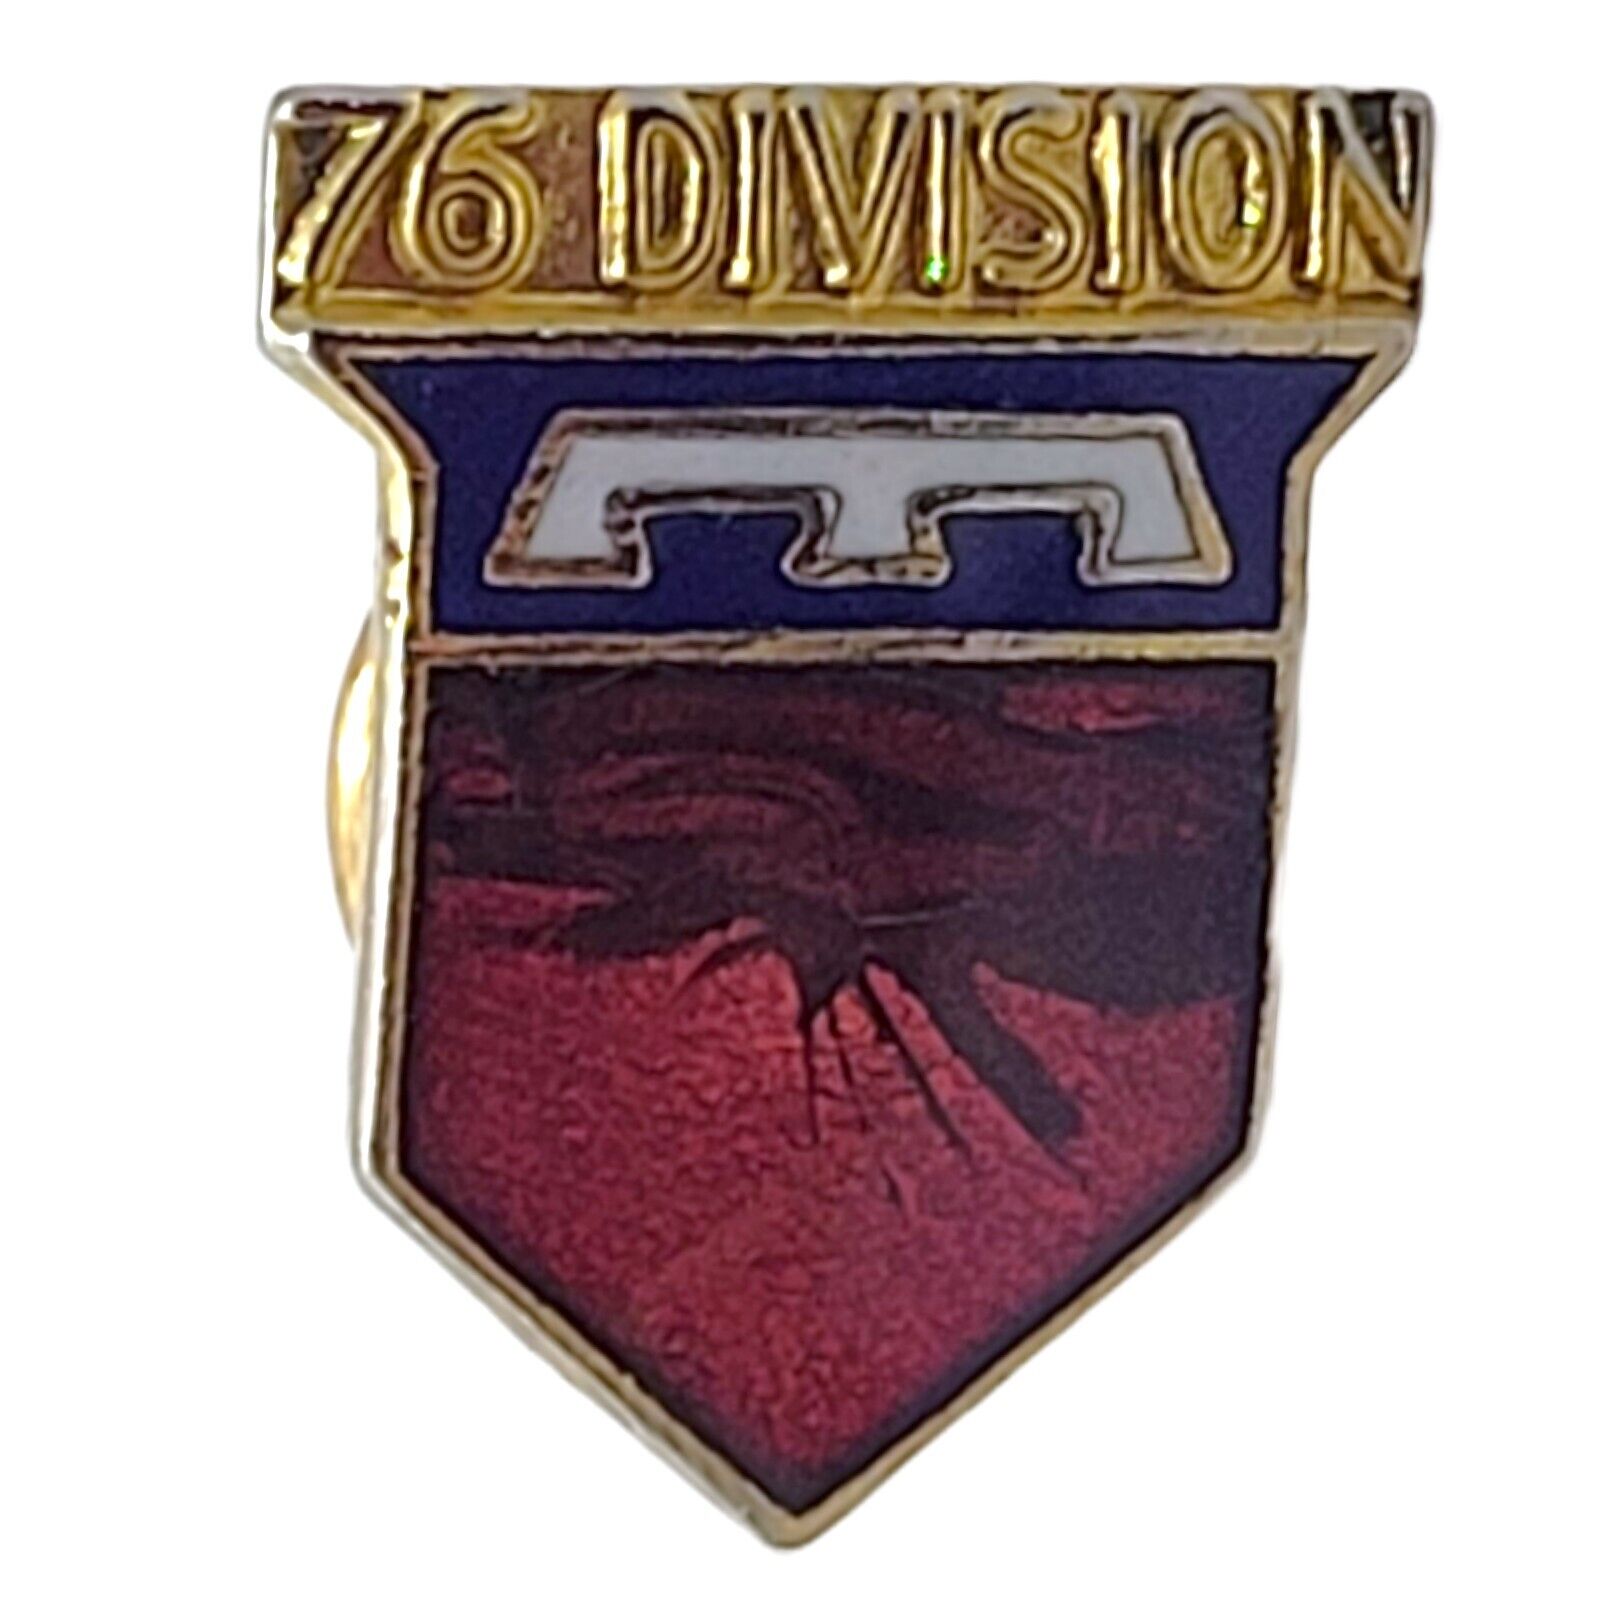 Vintage Enameled Pin- 76 Division